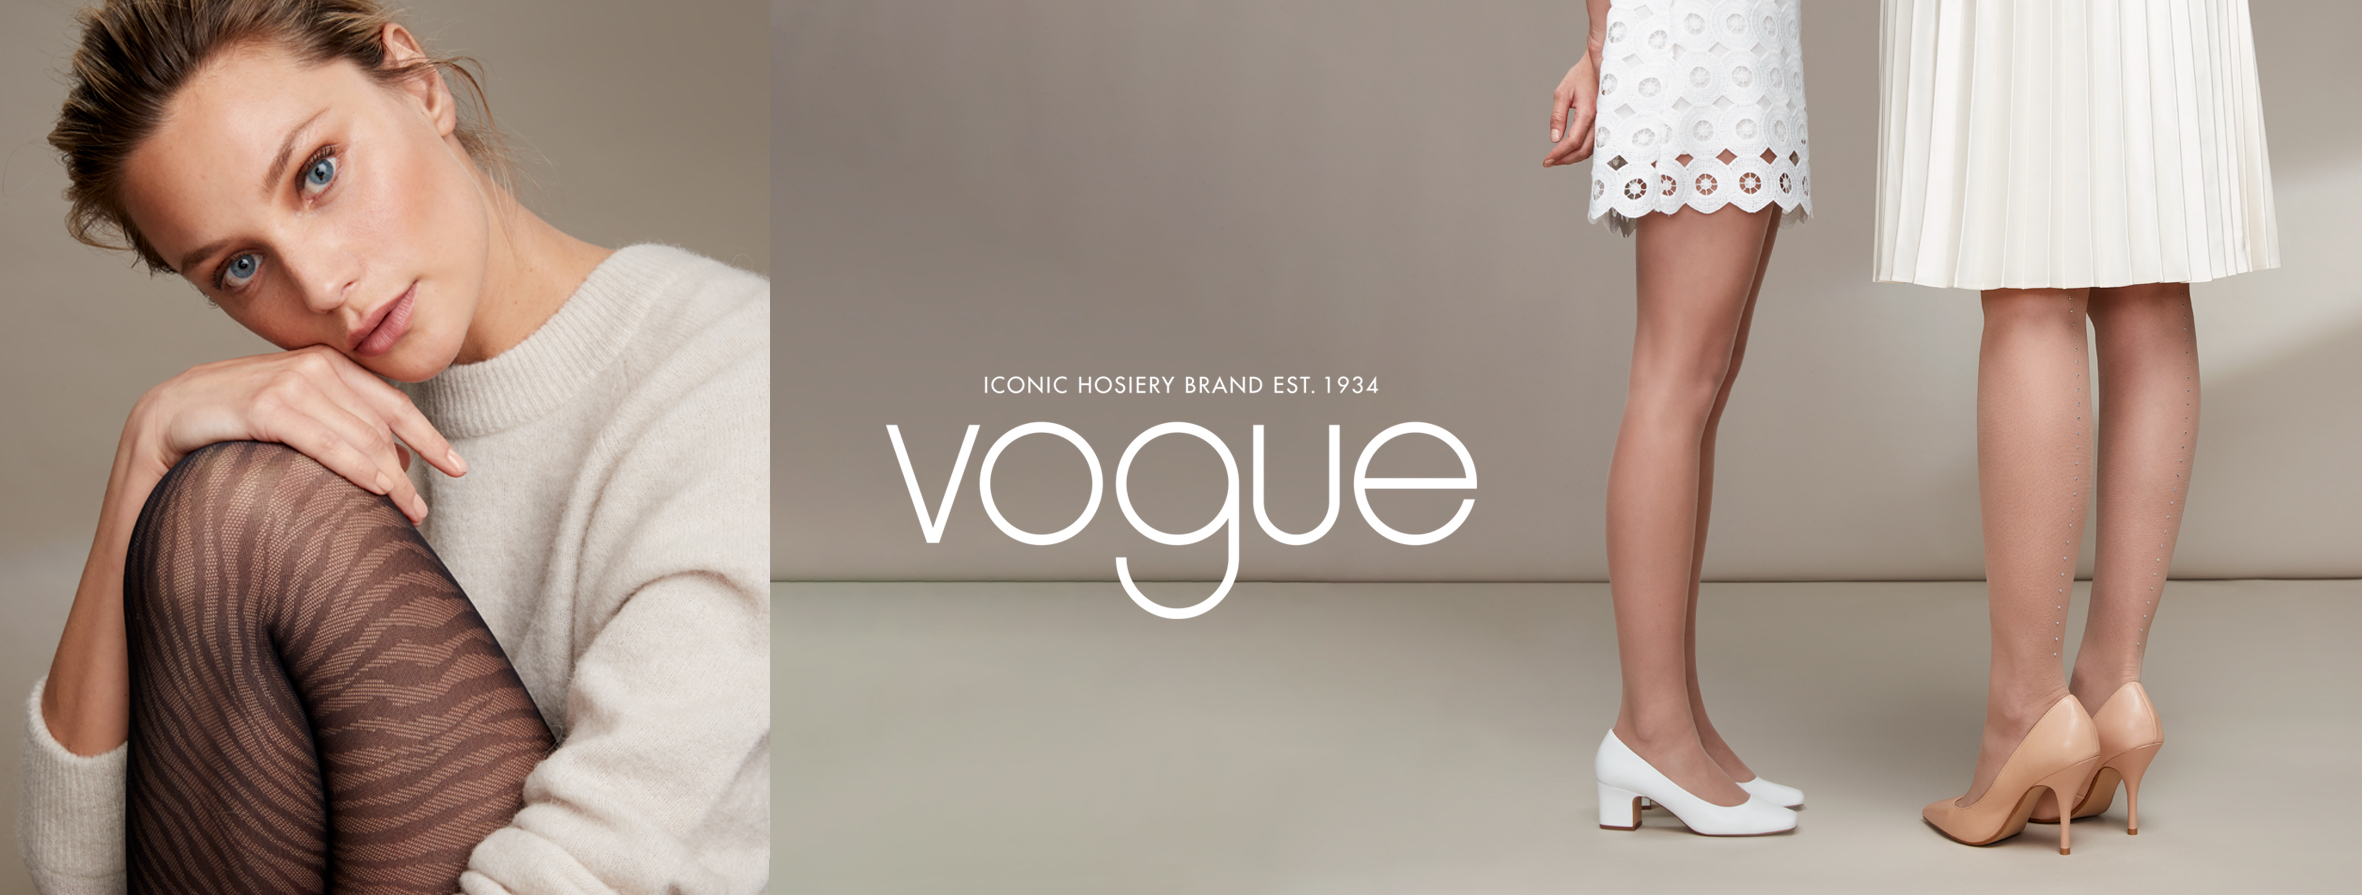 Vogue Brand Page Banner